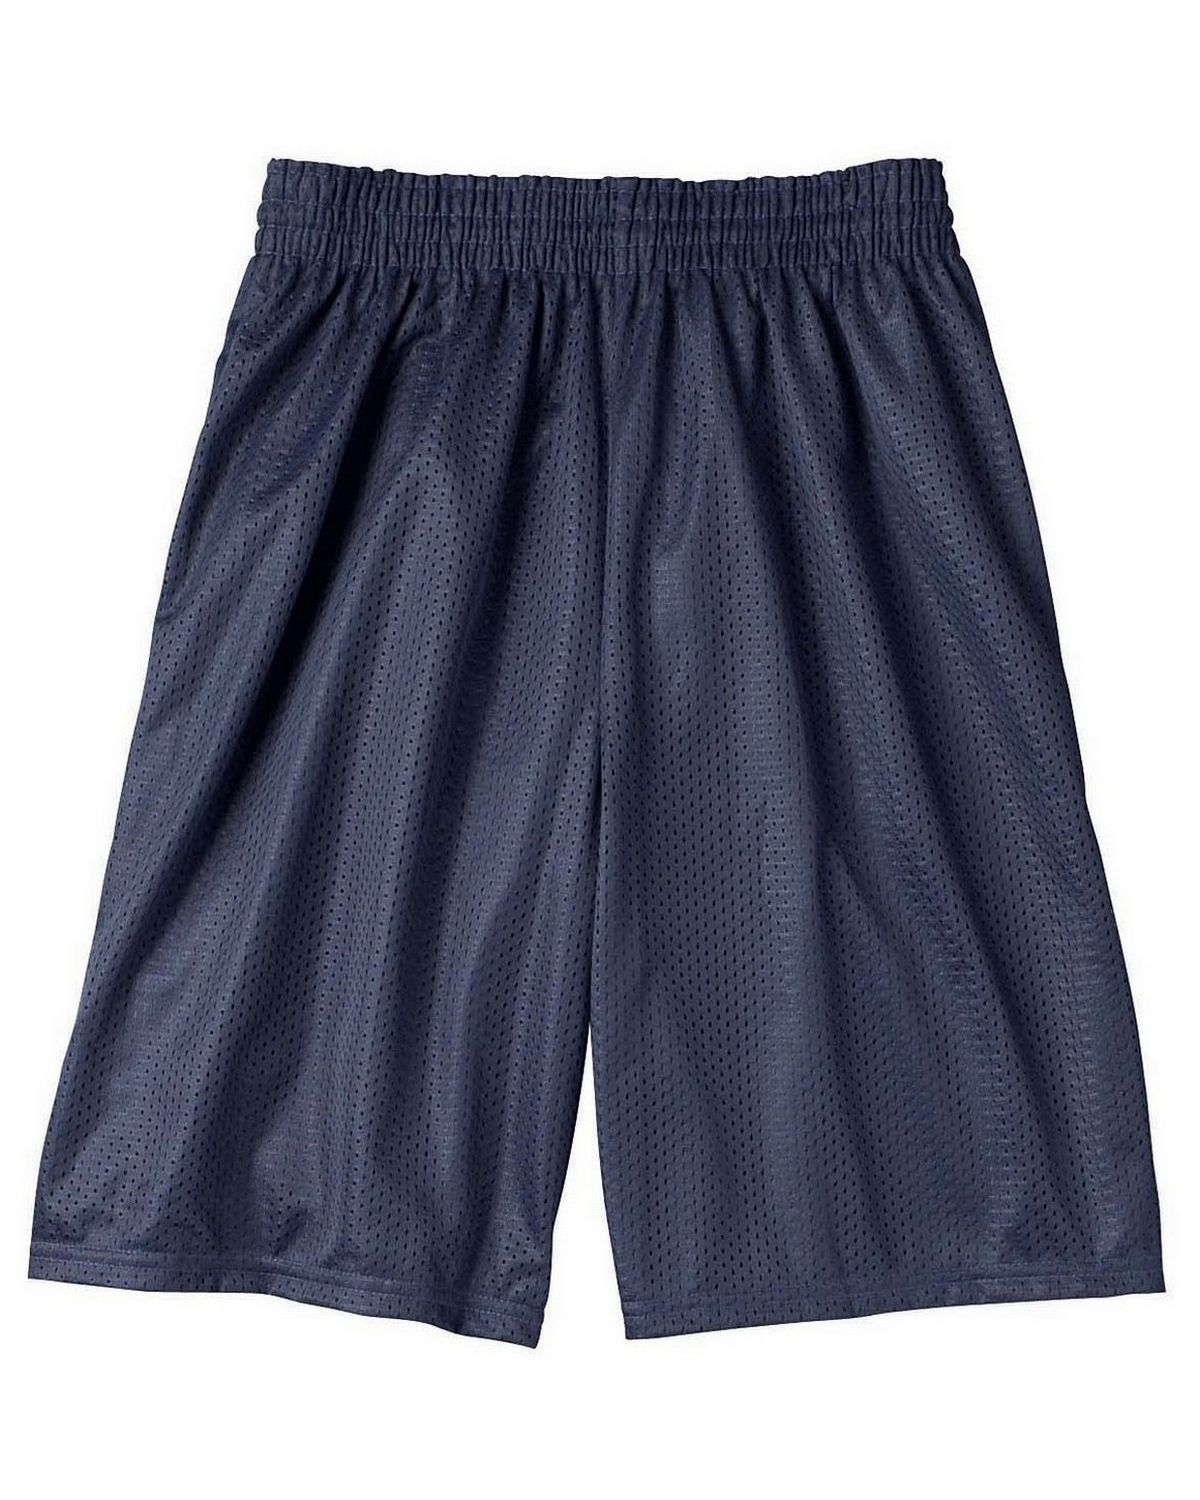 Augusta Sportswear 848 100% Polyester Mesh Shorts - ApparelnBags.com